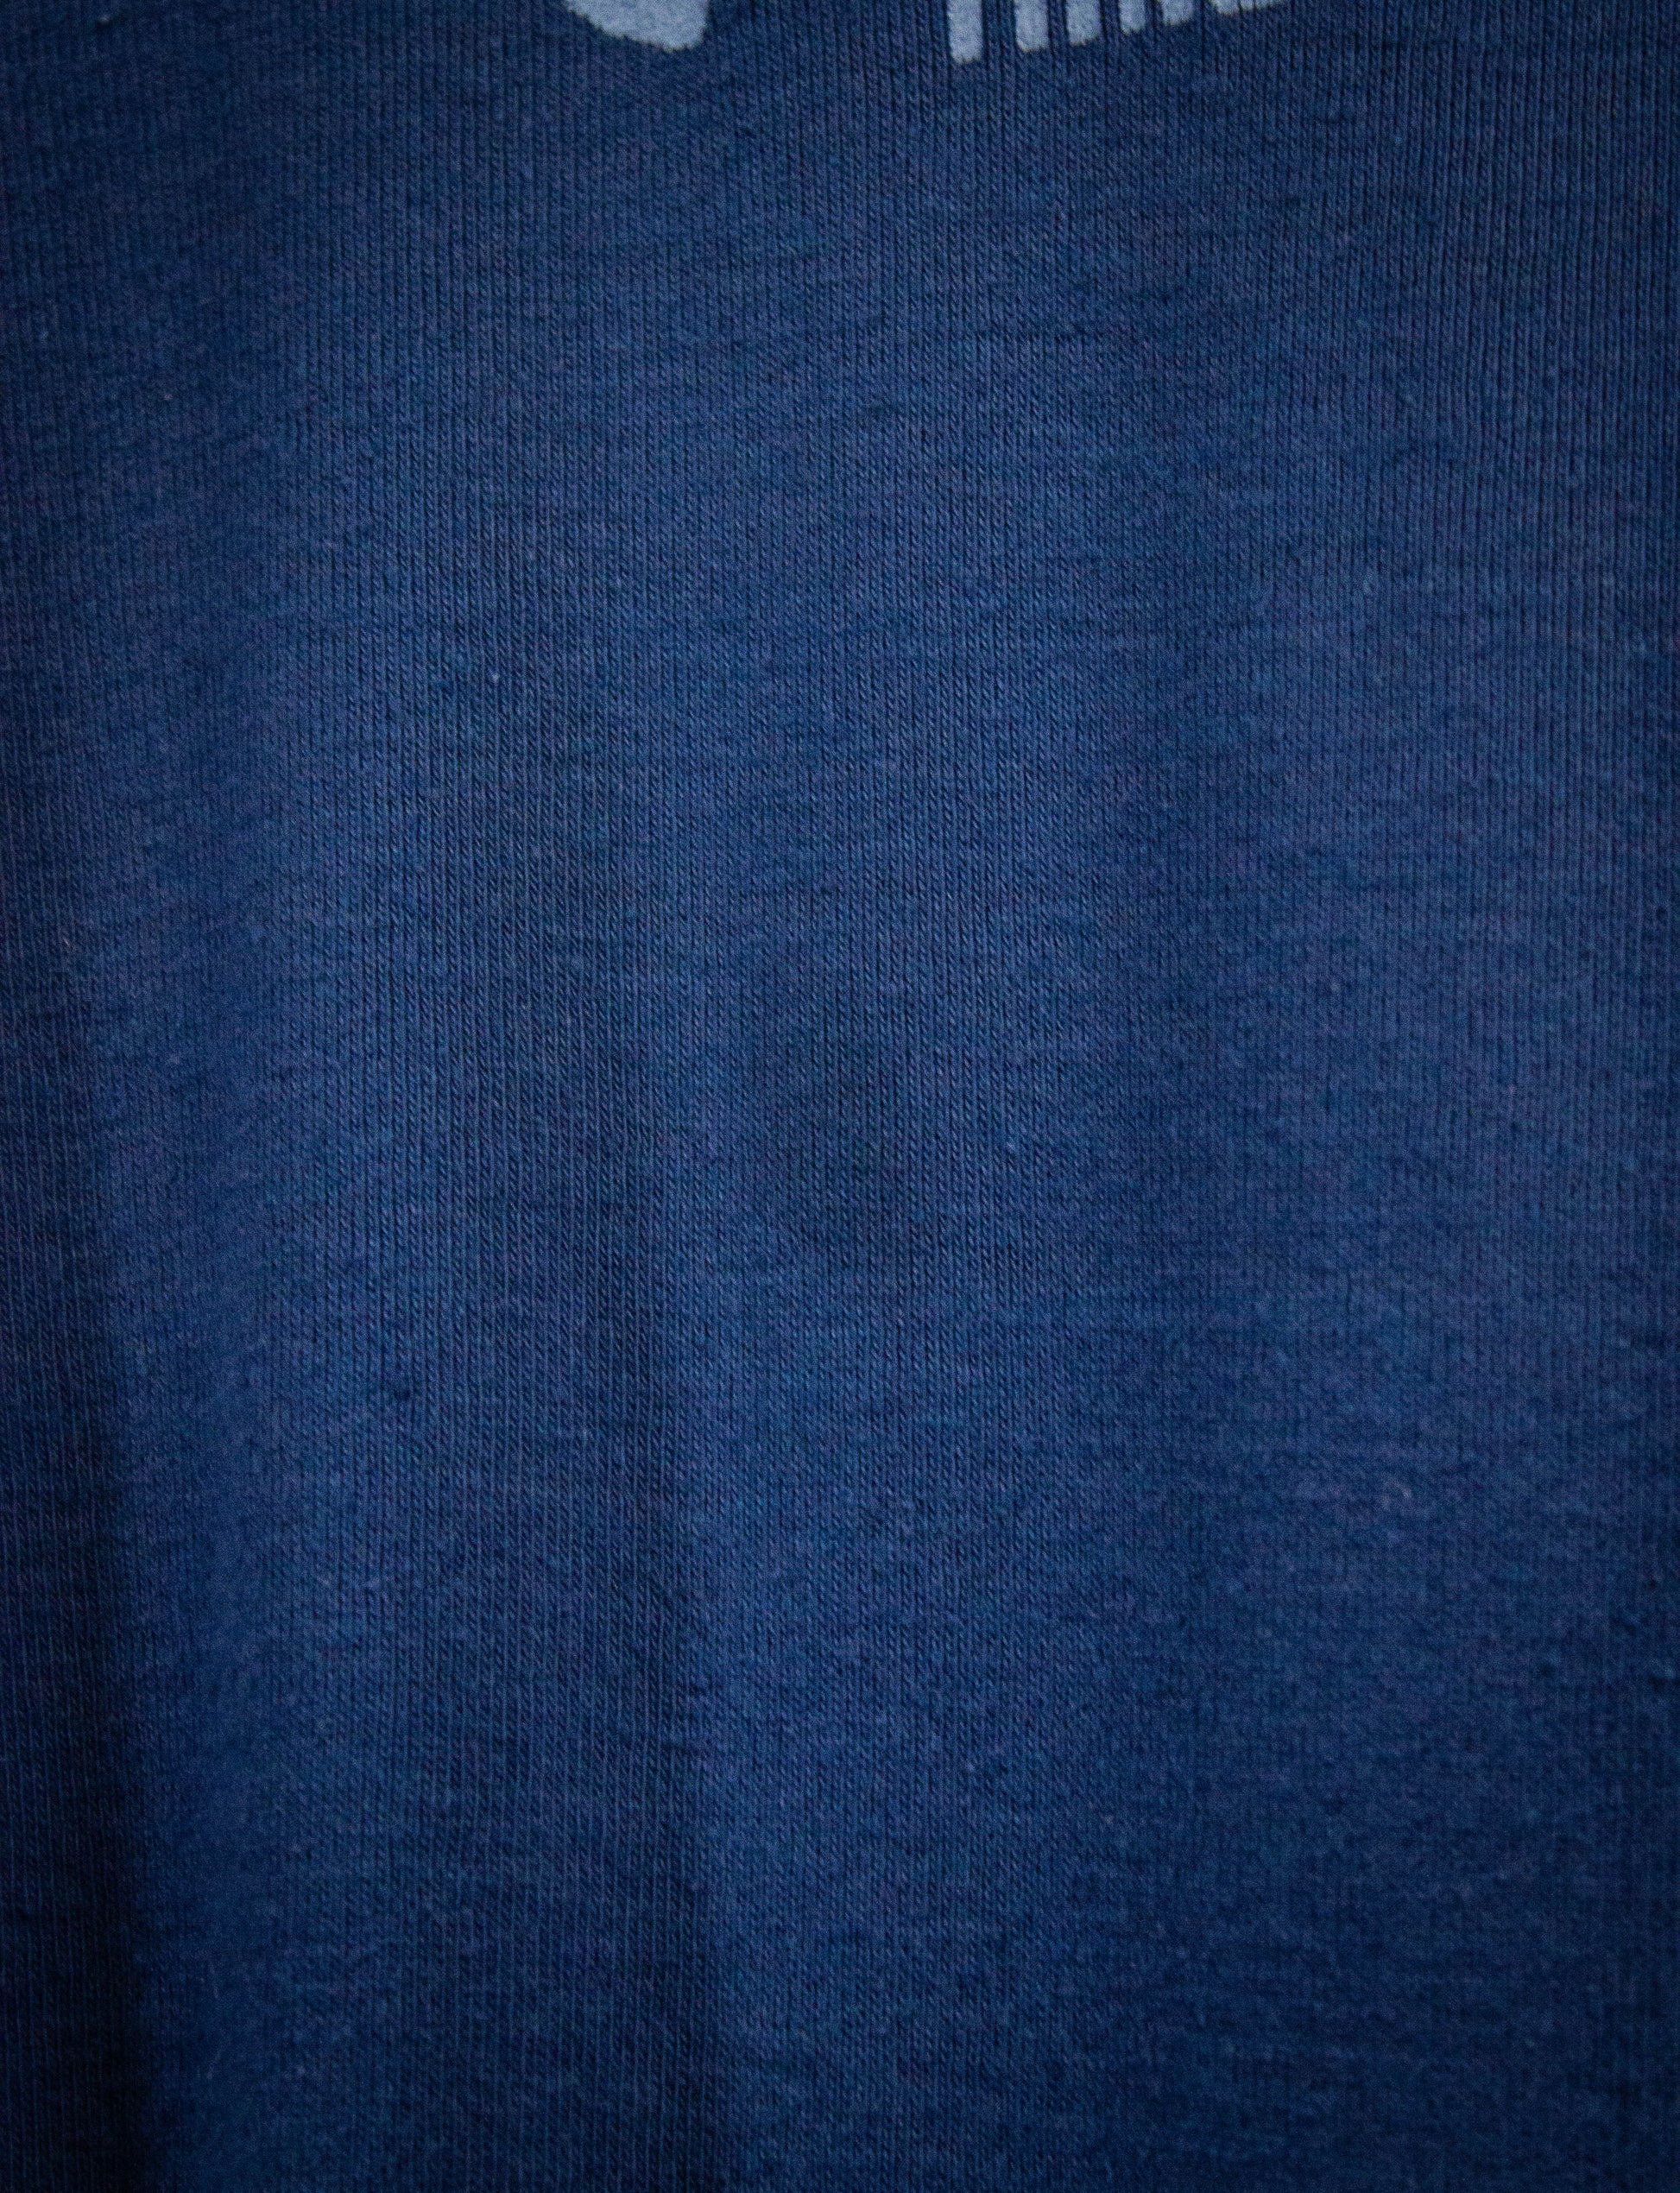 Vintage Tangerine Dream Graphic T Shirt 1975 Blue XS